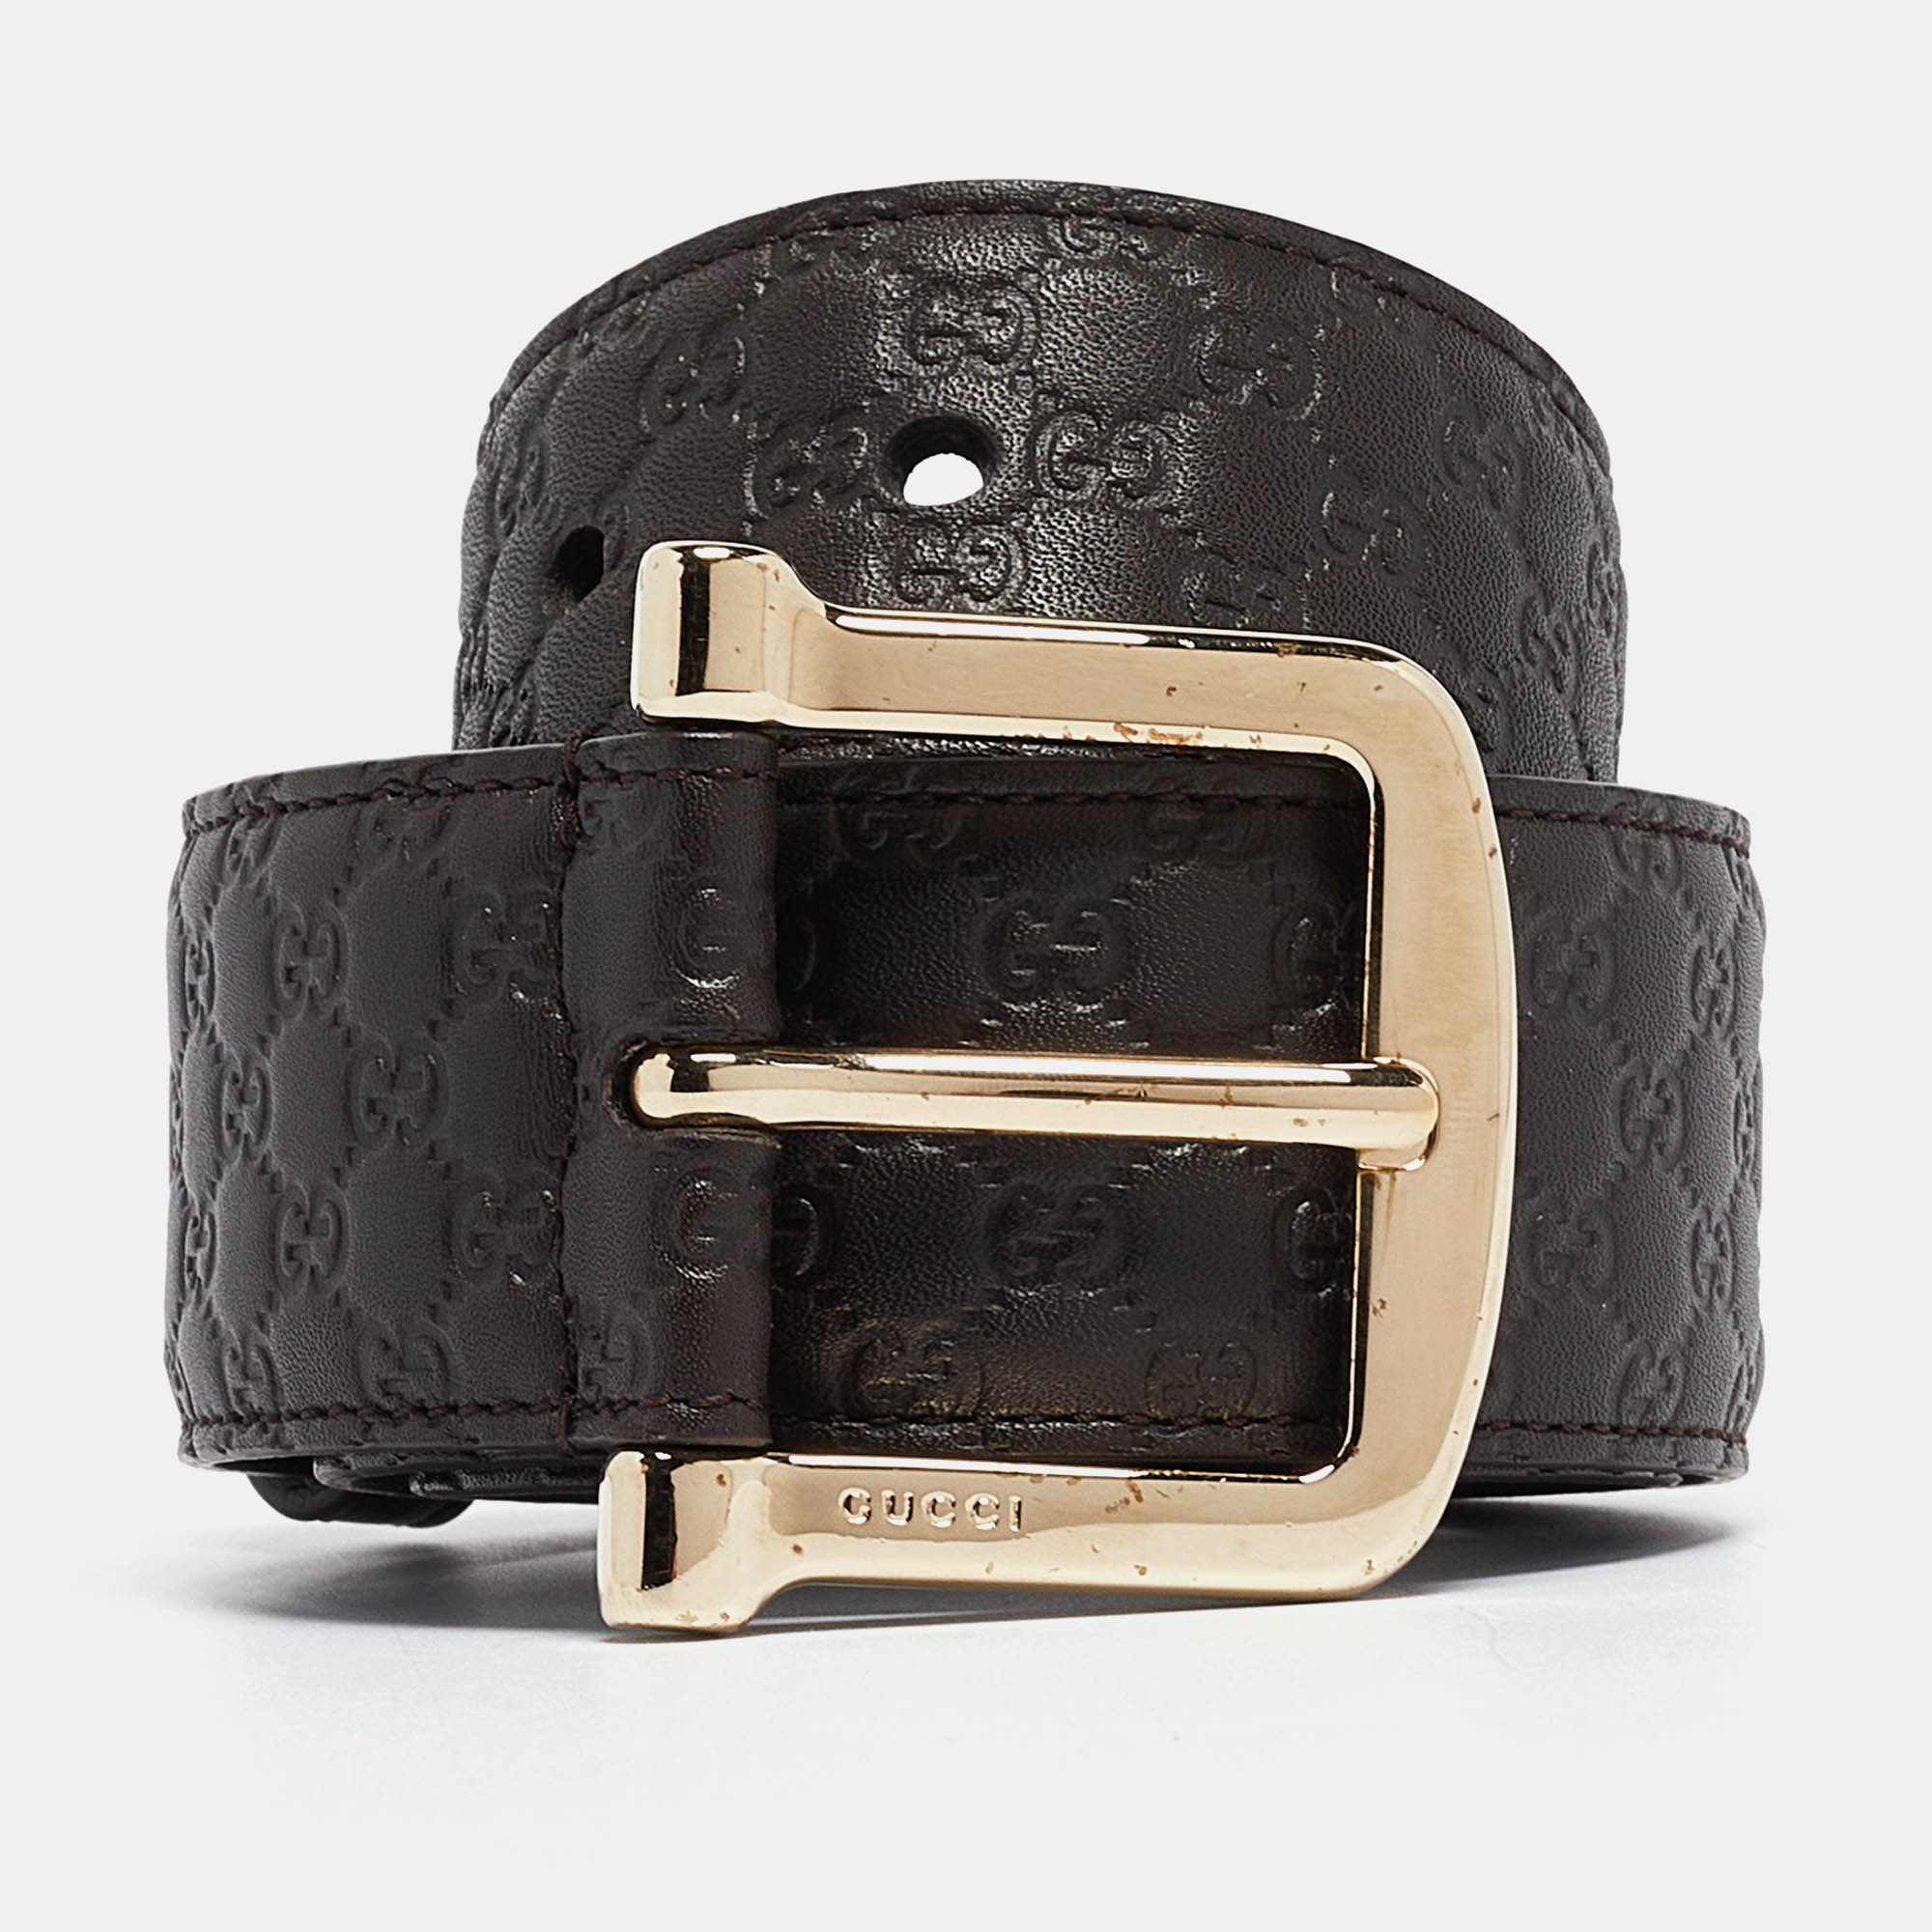 Gucci dark brown guccissima leather d buckle belt 85cm